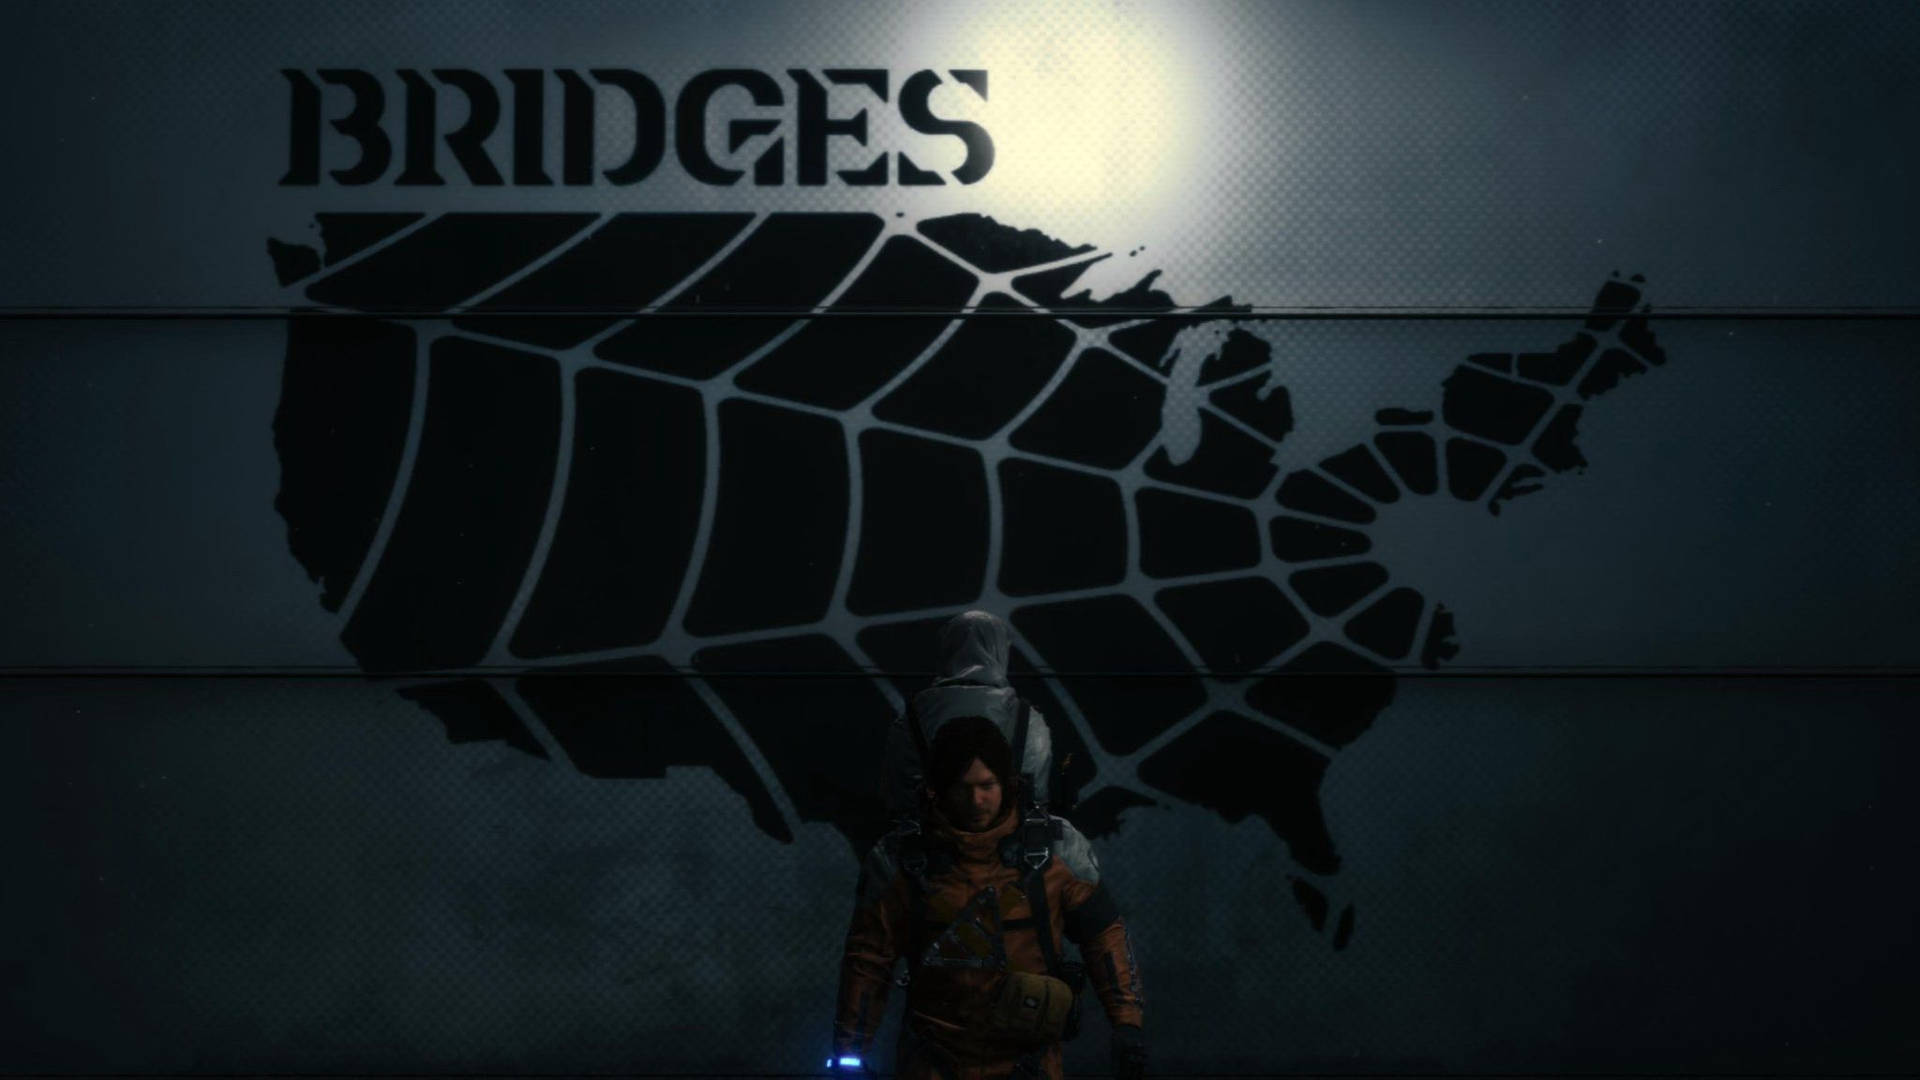 Bridges Logo In Death Stranding Wallpaper